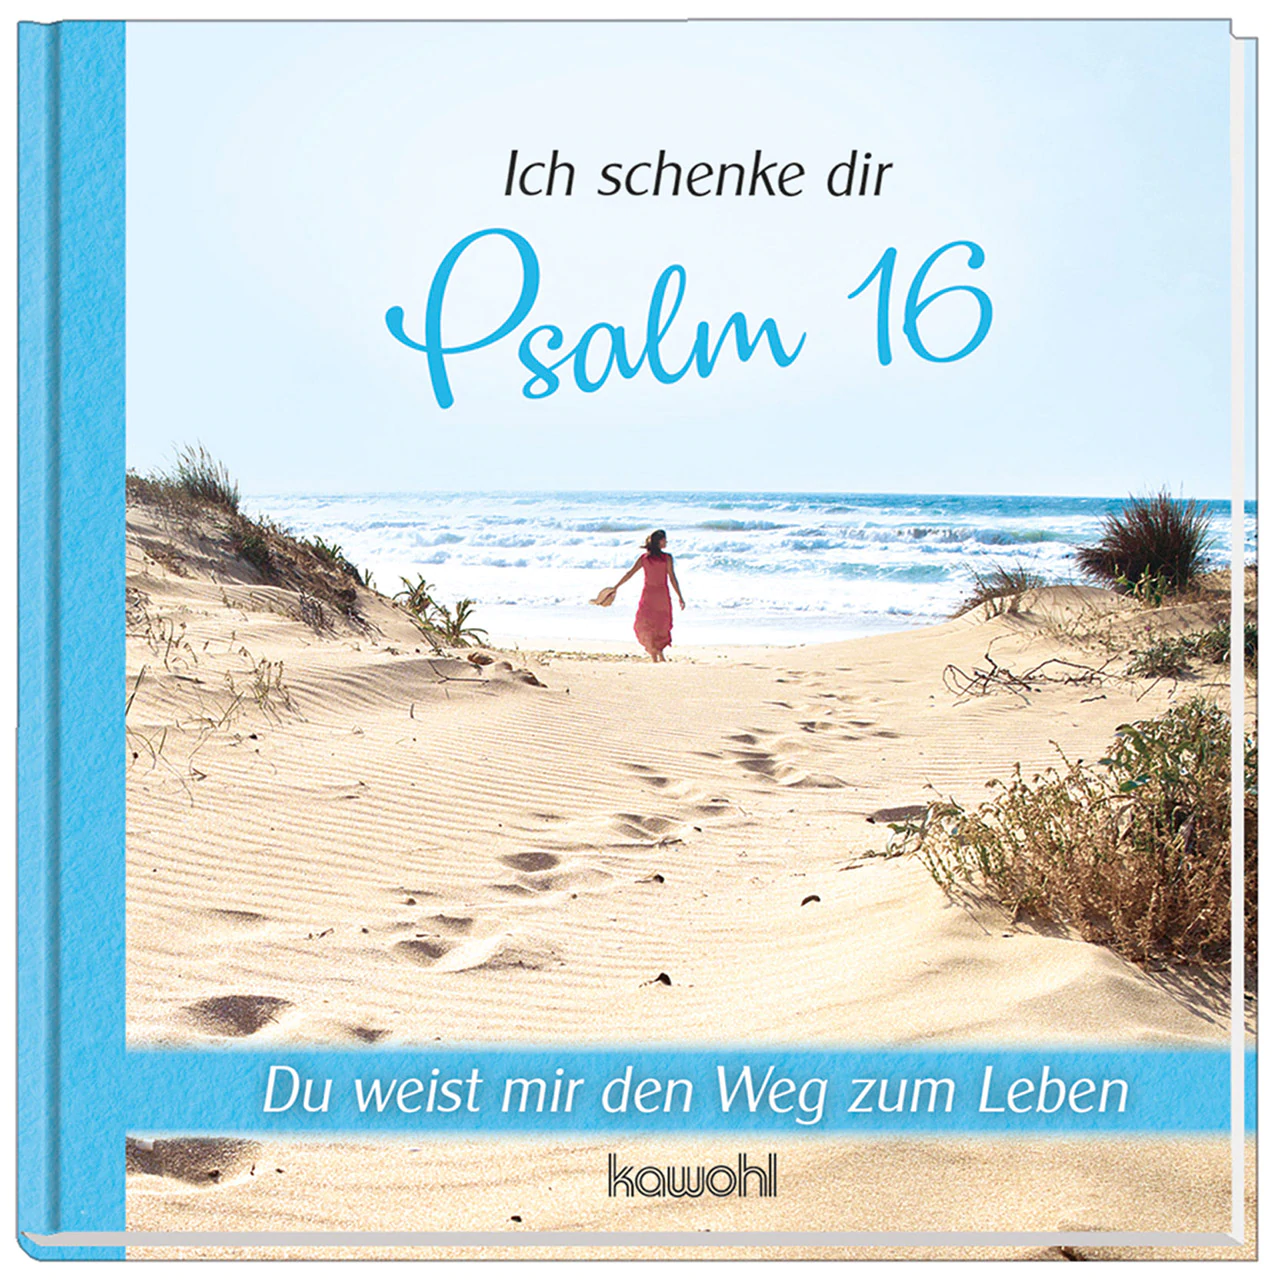 Ich schenke dir Psalm 16 - Du weist mir den Weg zum Leben